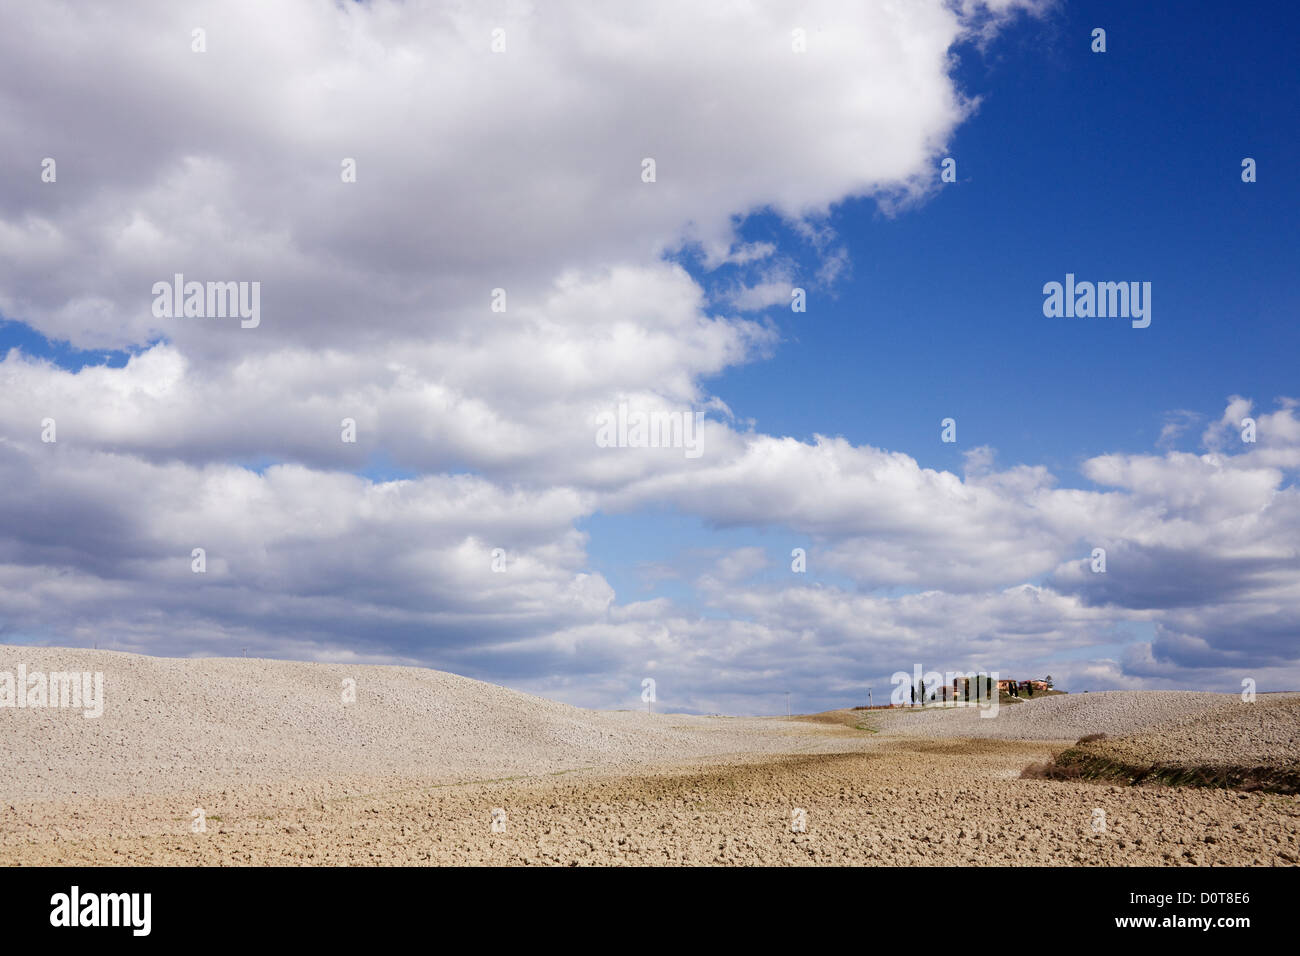 Nubes áridas contrasta copia espacio horizontal seca del desierto paisaje país aislado caliente Italia la Crete sinesi paisaje Foto de stock